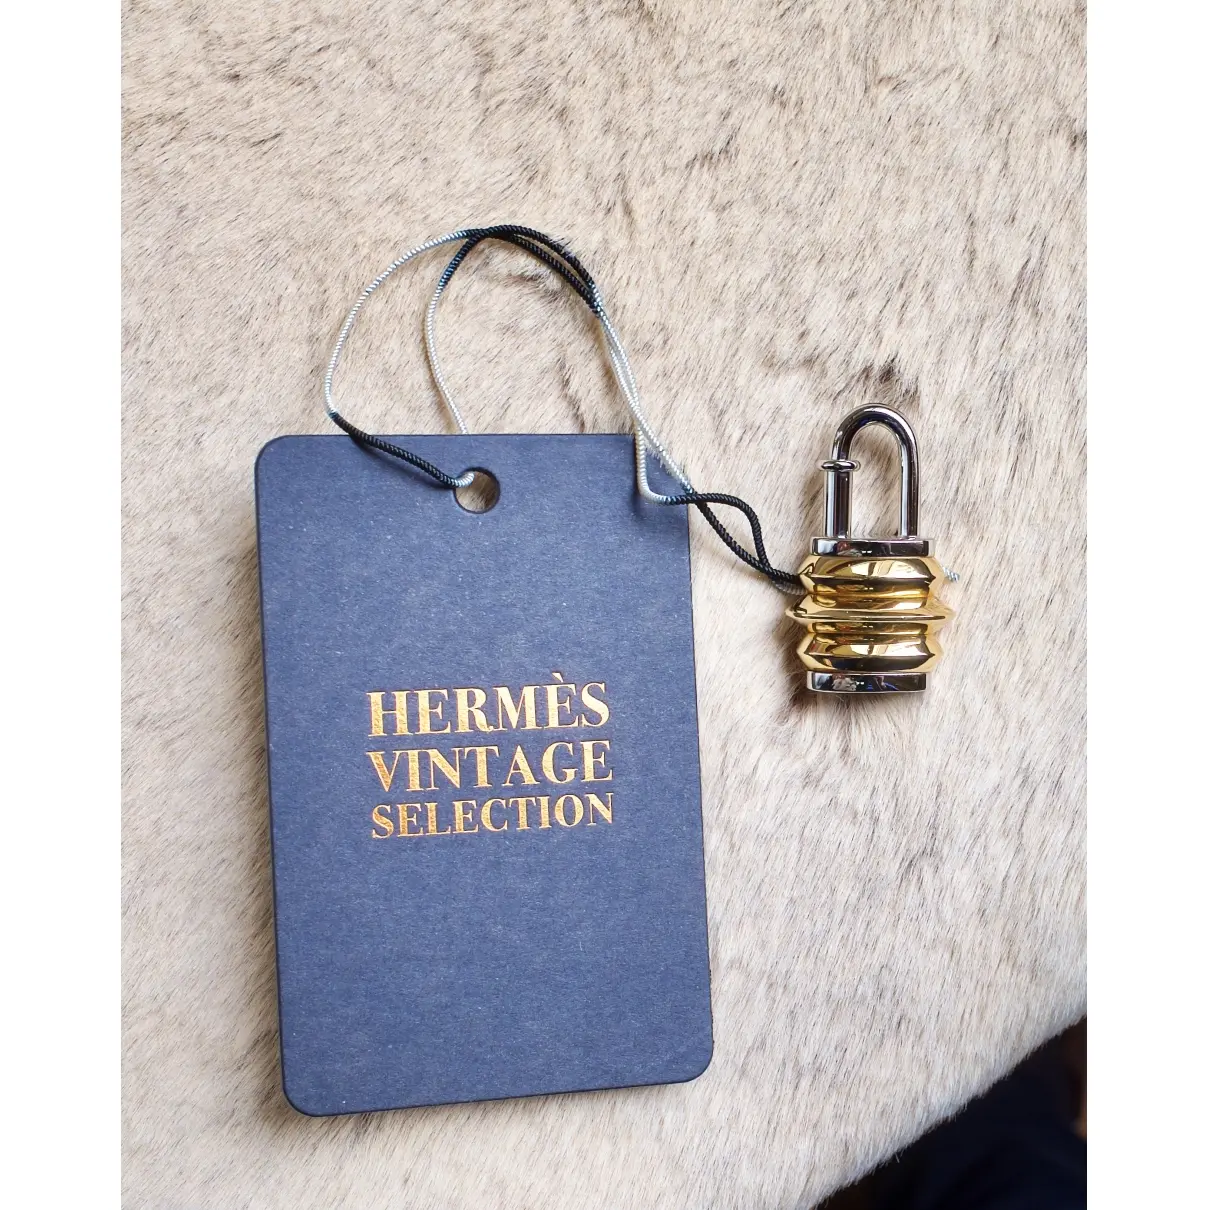 Cadenas gold bag charm Hermès - Vintage